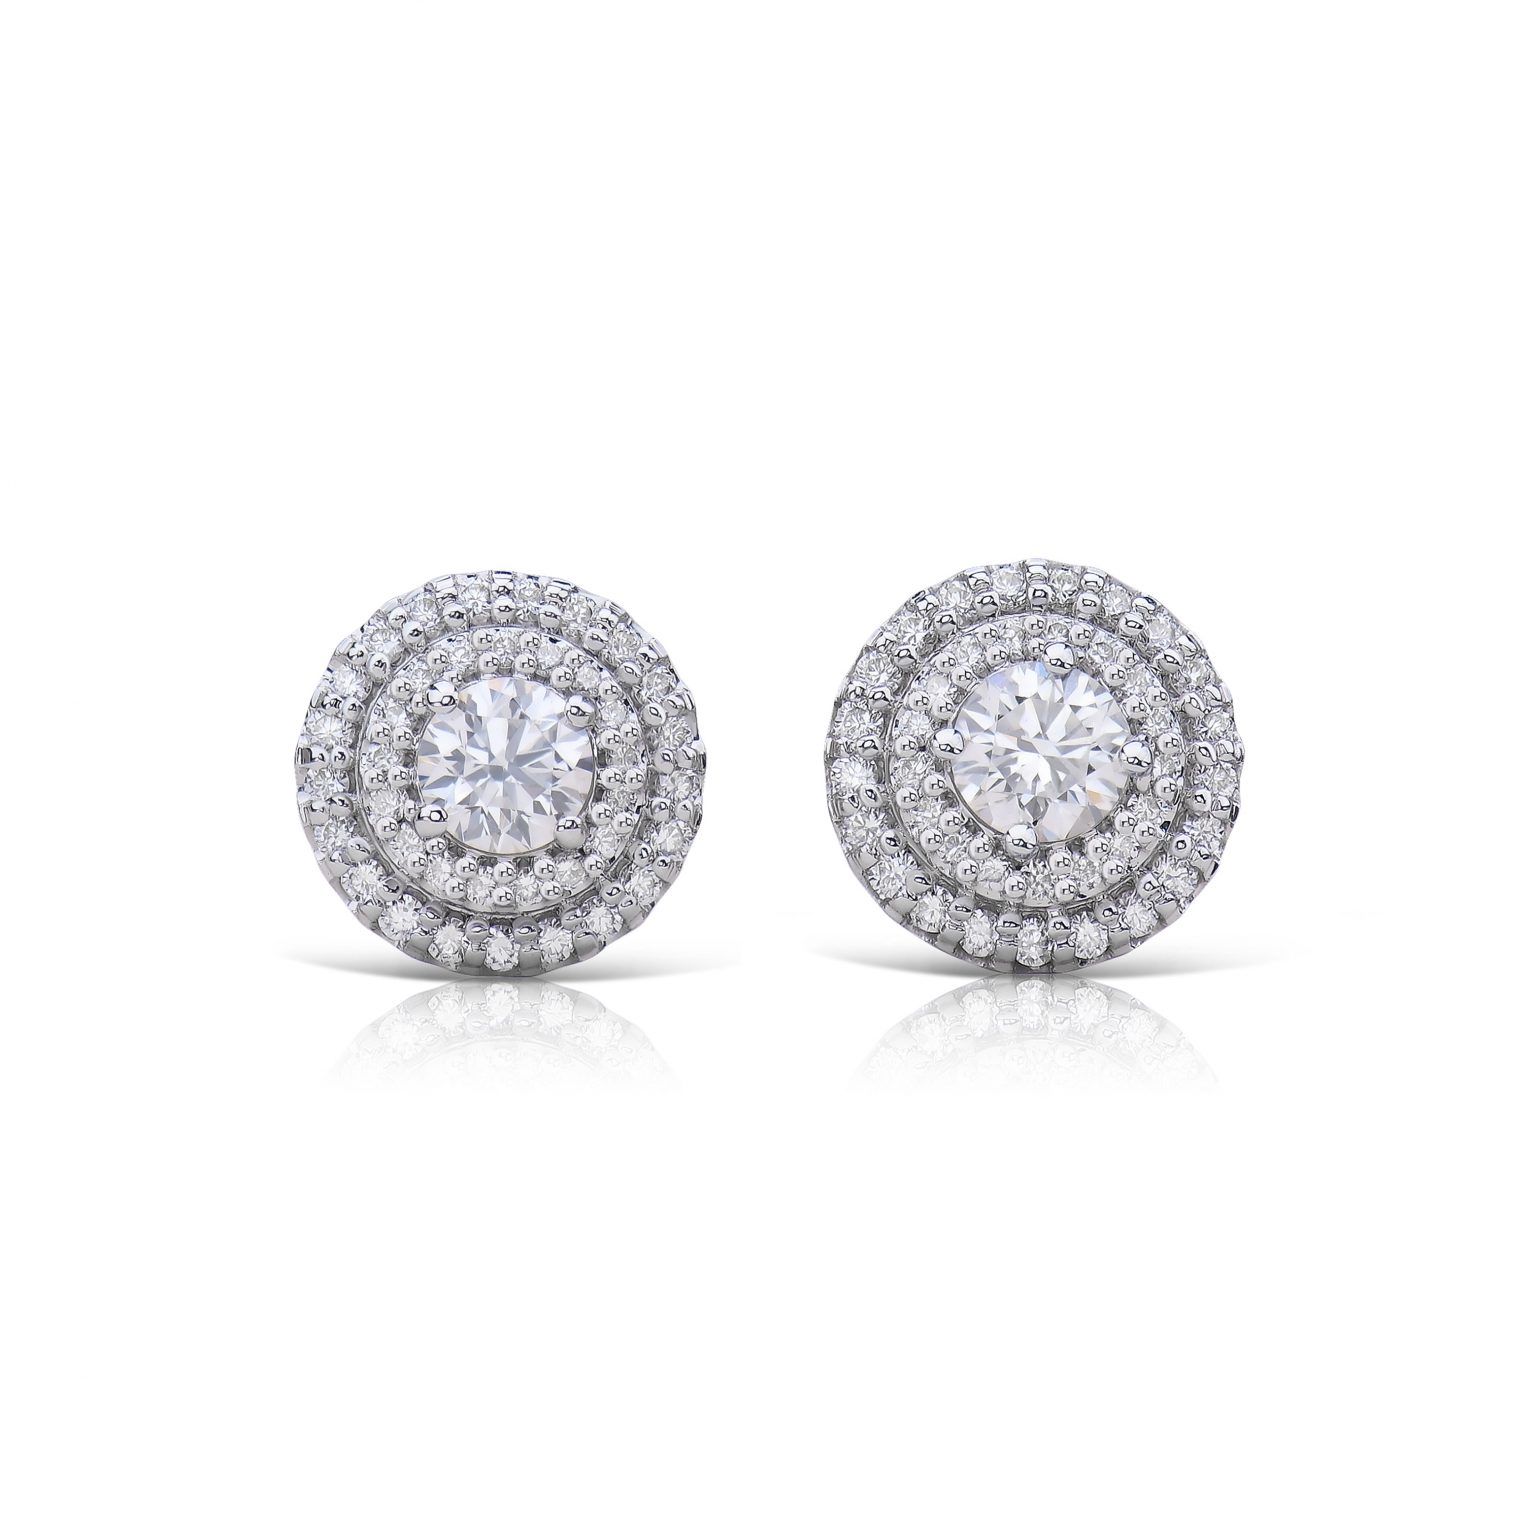 Diamond stud earrings — 2.21 ct total weight